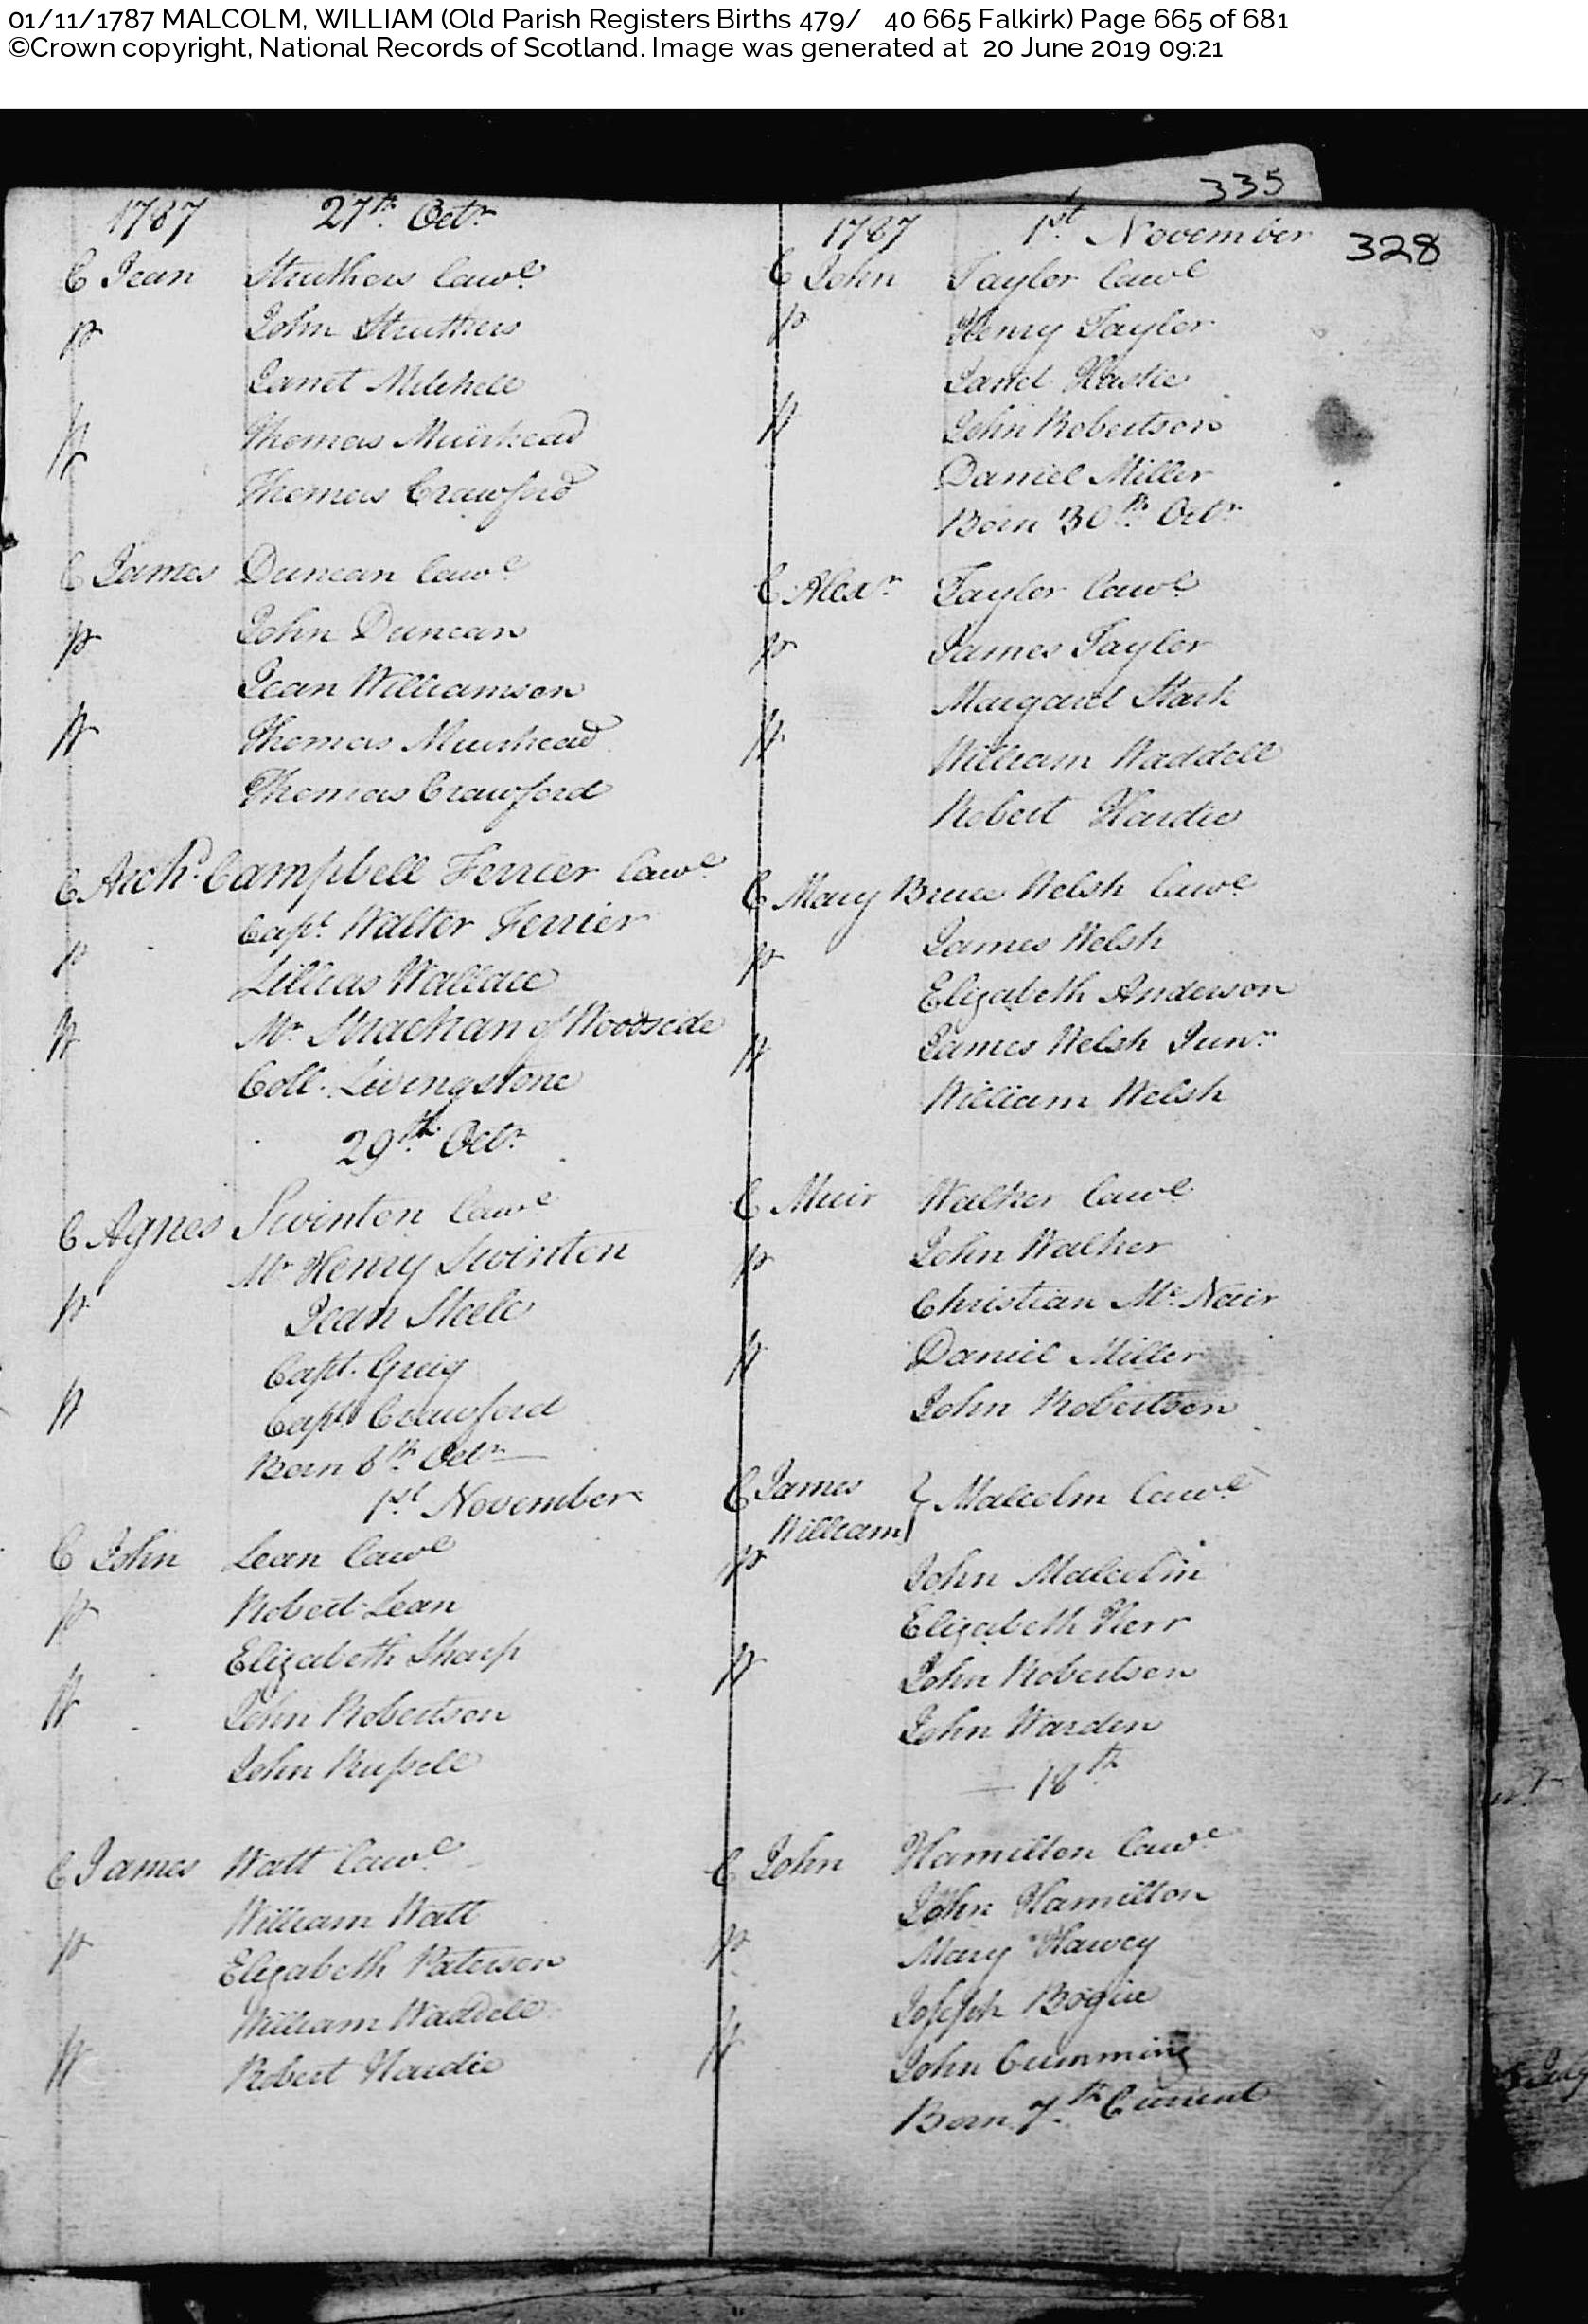 James_and_William_Malcolm_B1787 Falkirk, November 1, 1787